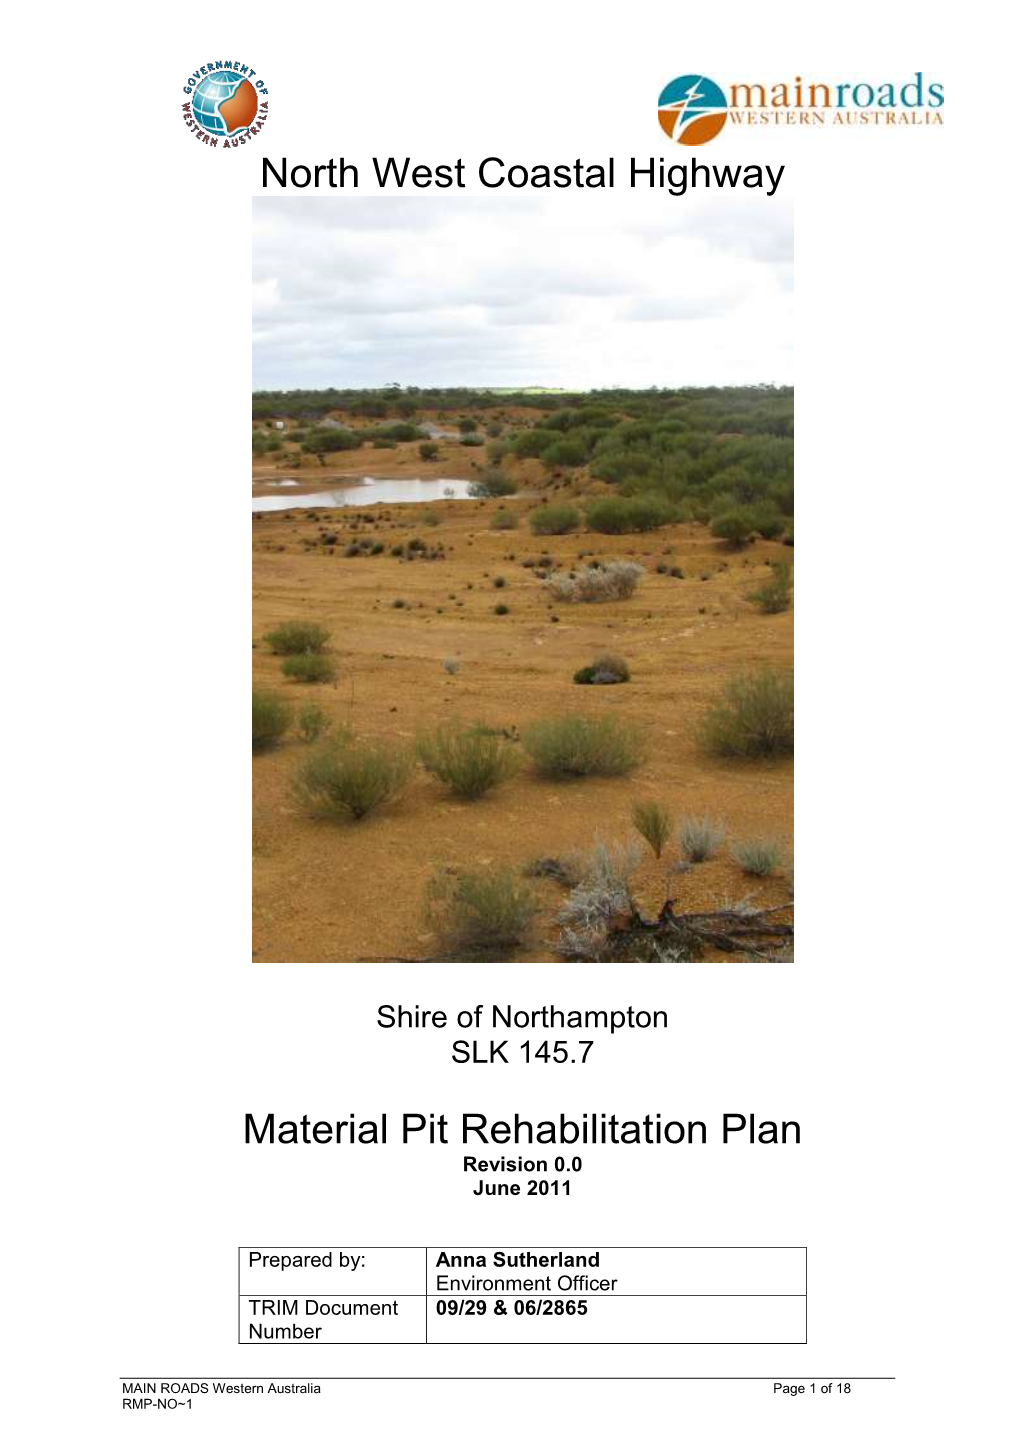 Vegetation Rehabilitation Plan Template